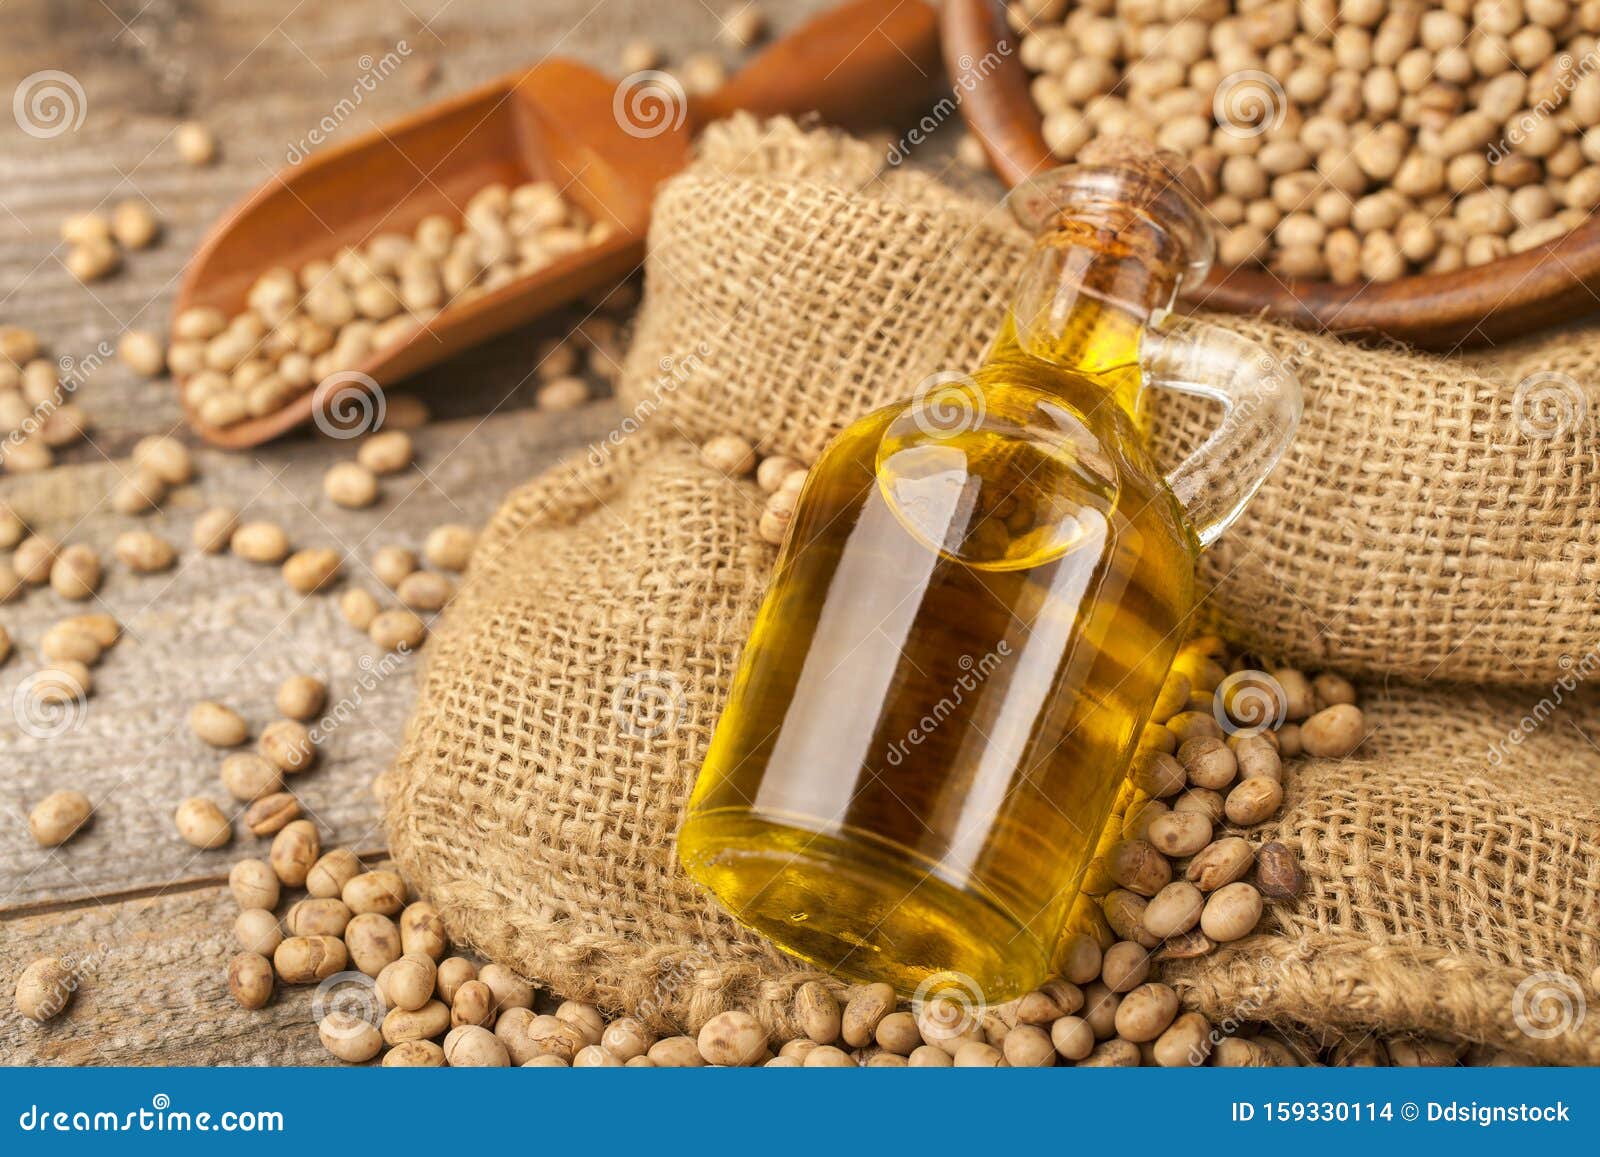 homemade organically produced soybean oil